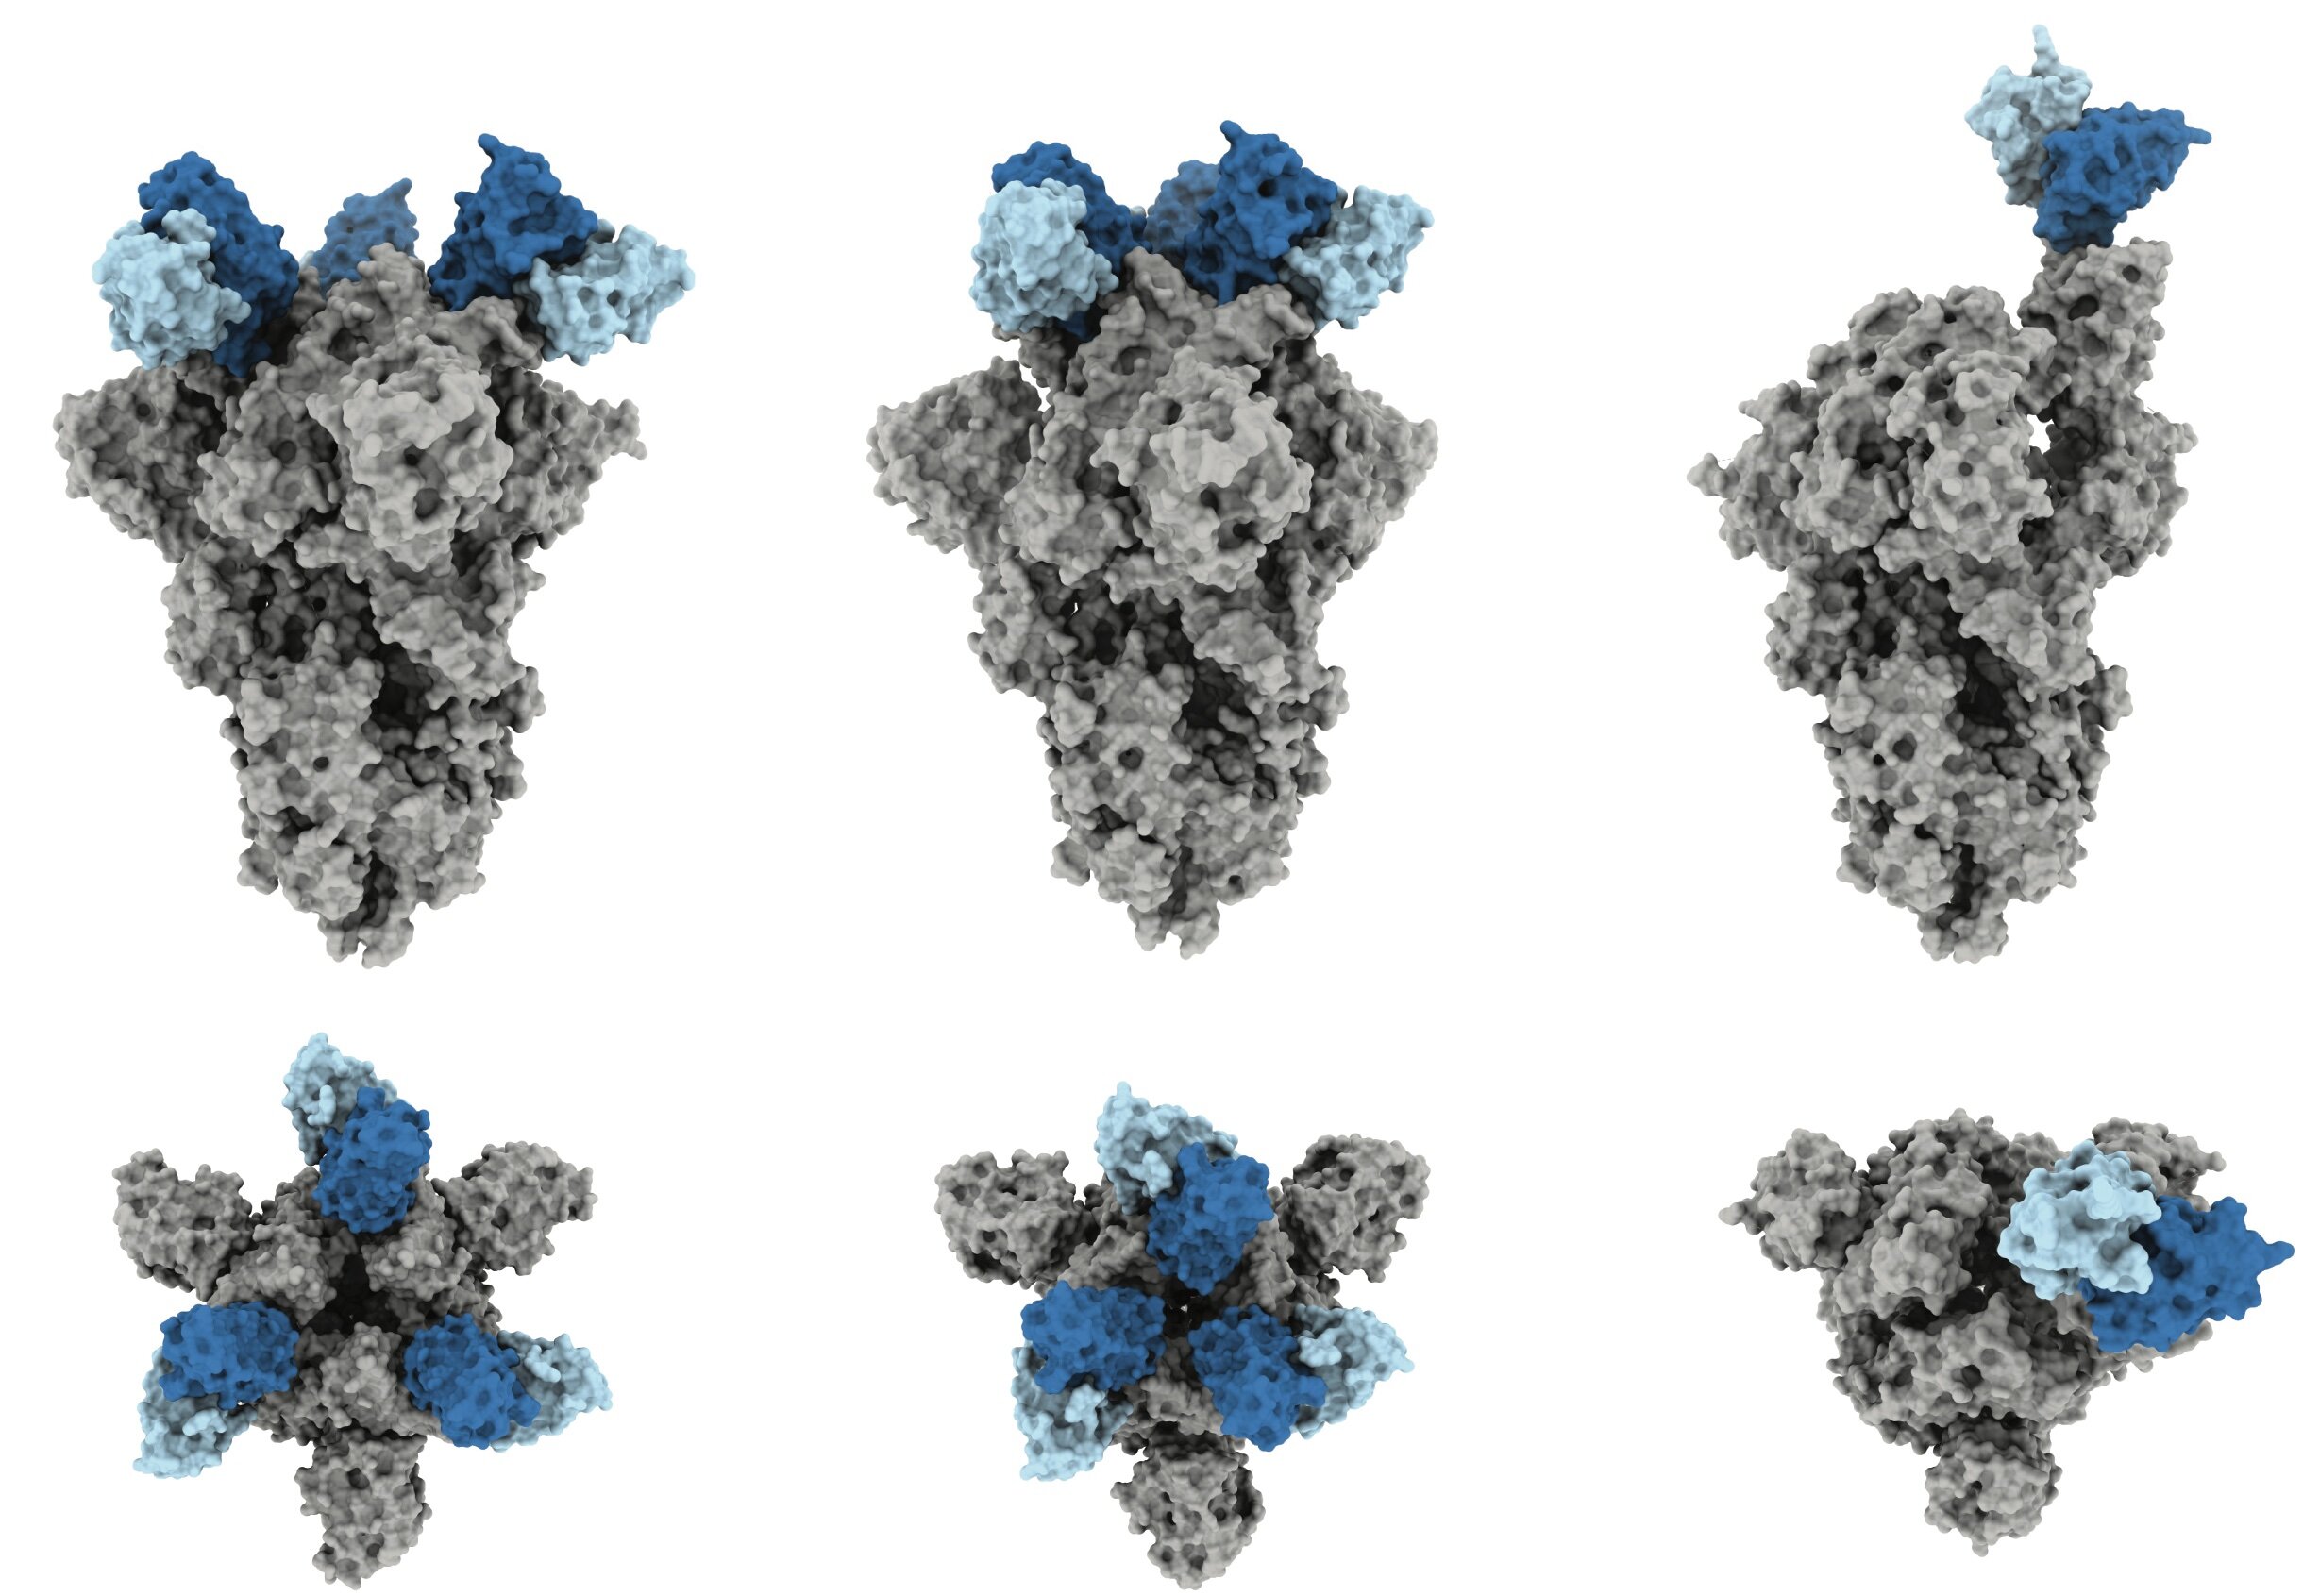 #Scientists explain what makes COVID-19 antibody ‘J08’ so potent